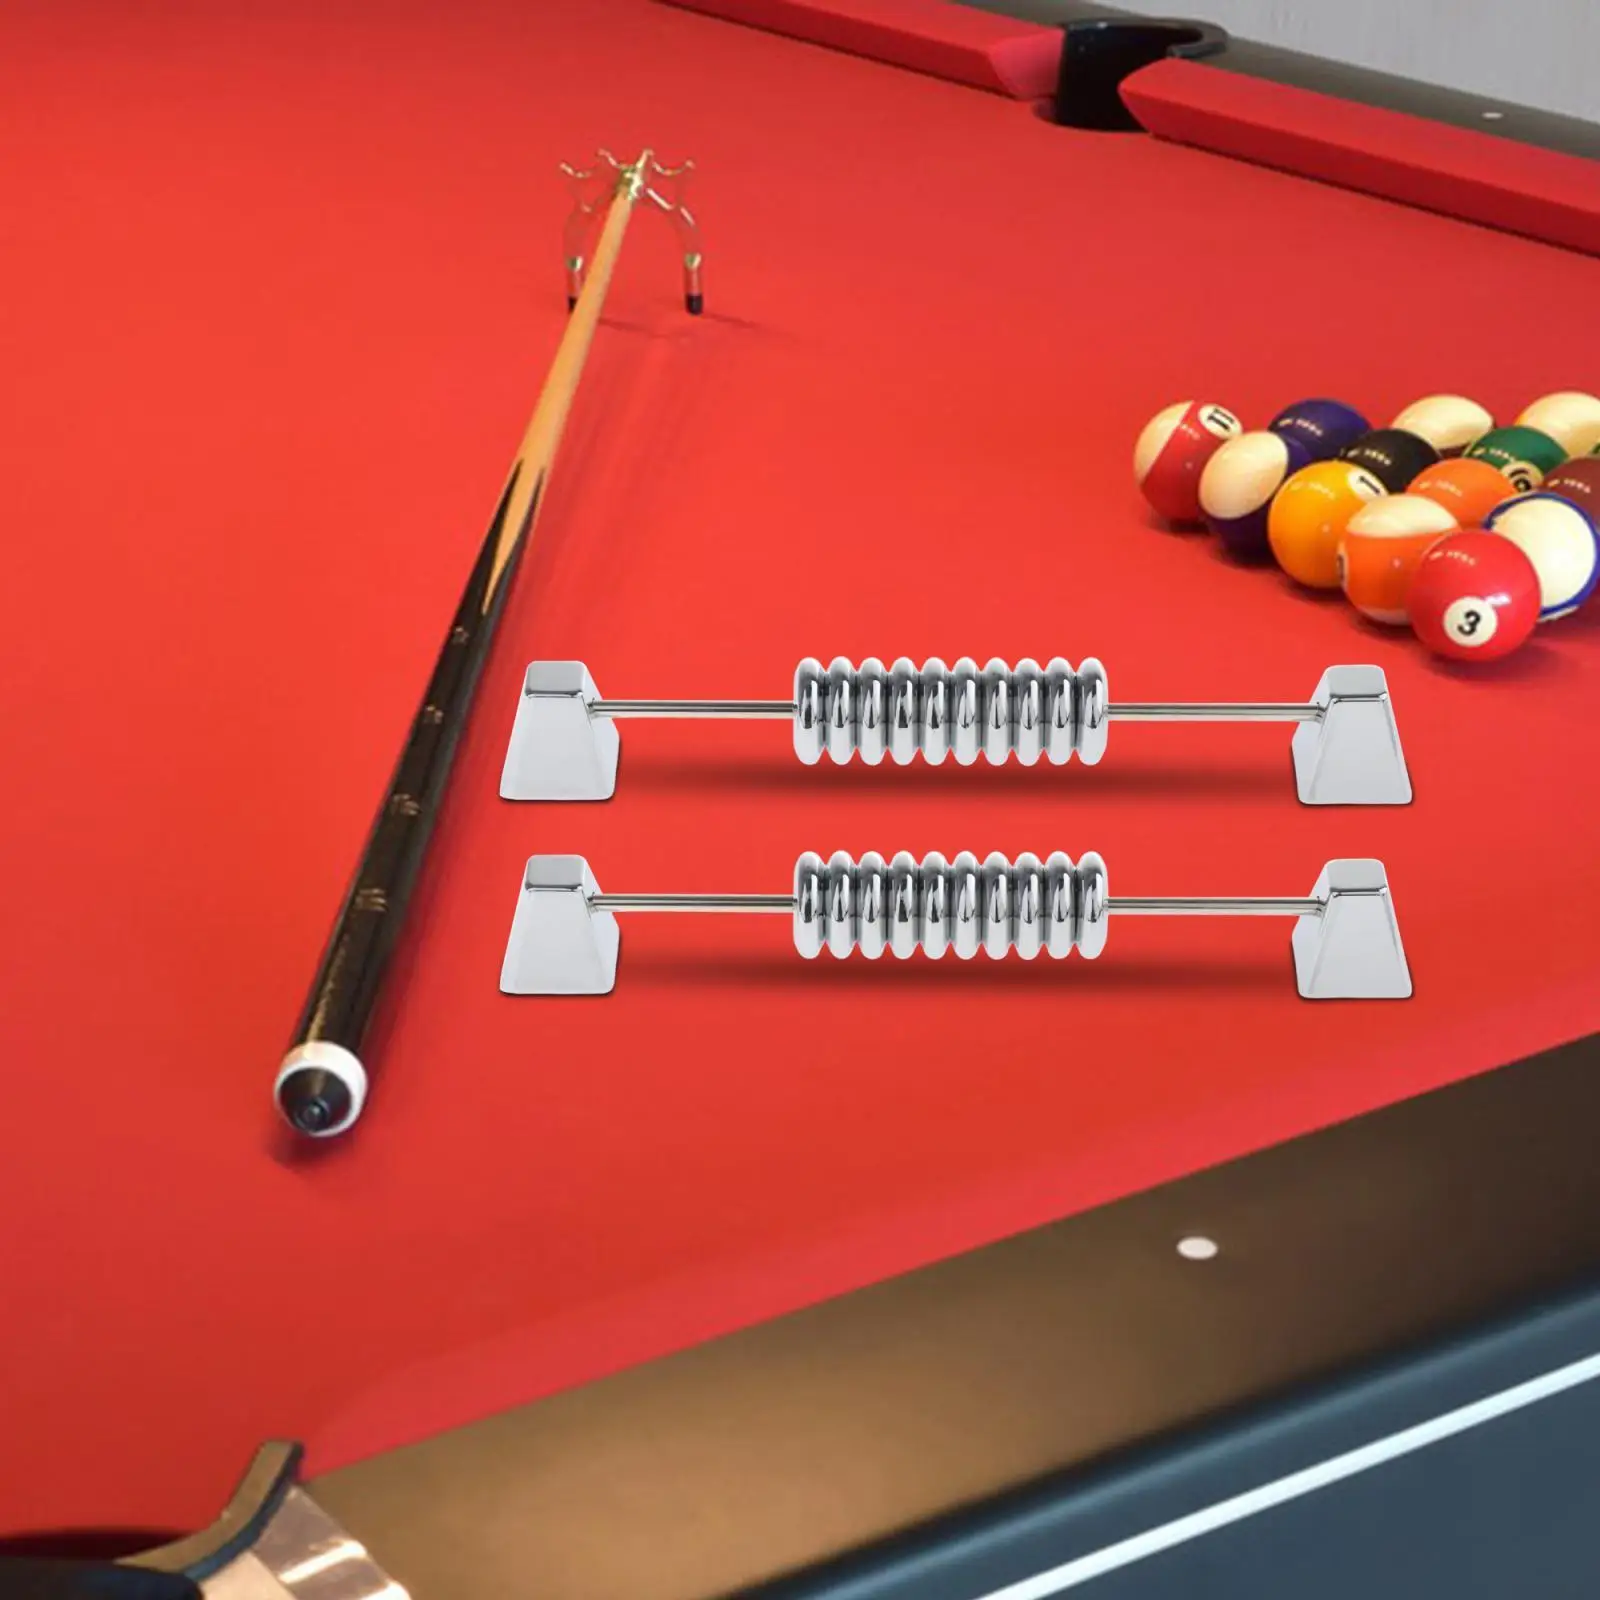 2Pcs Shuffleboard Score Keeper Home Supplies Tabletop Games Scoring Counter Snooker Billiard Scoreboard for Shuffleboard Games